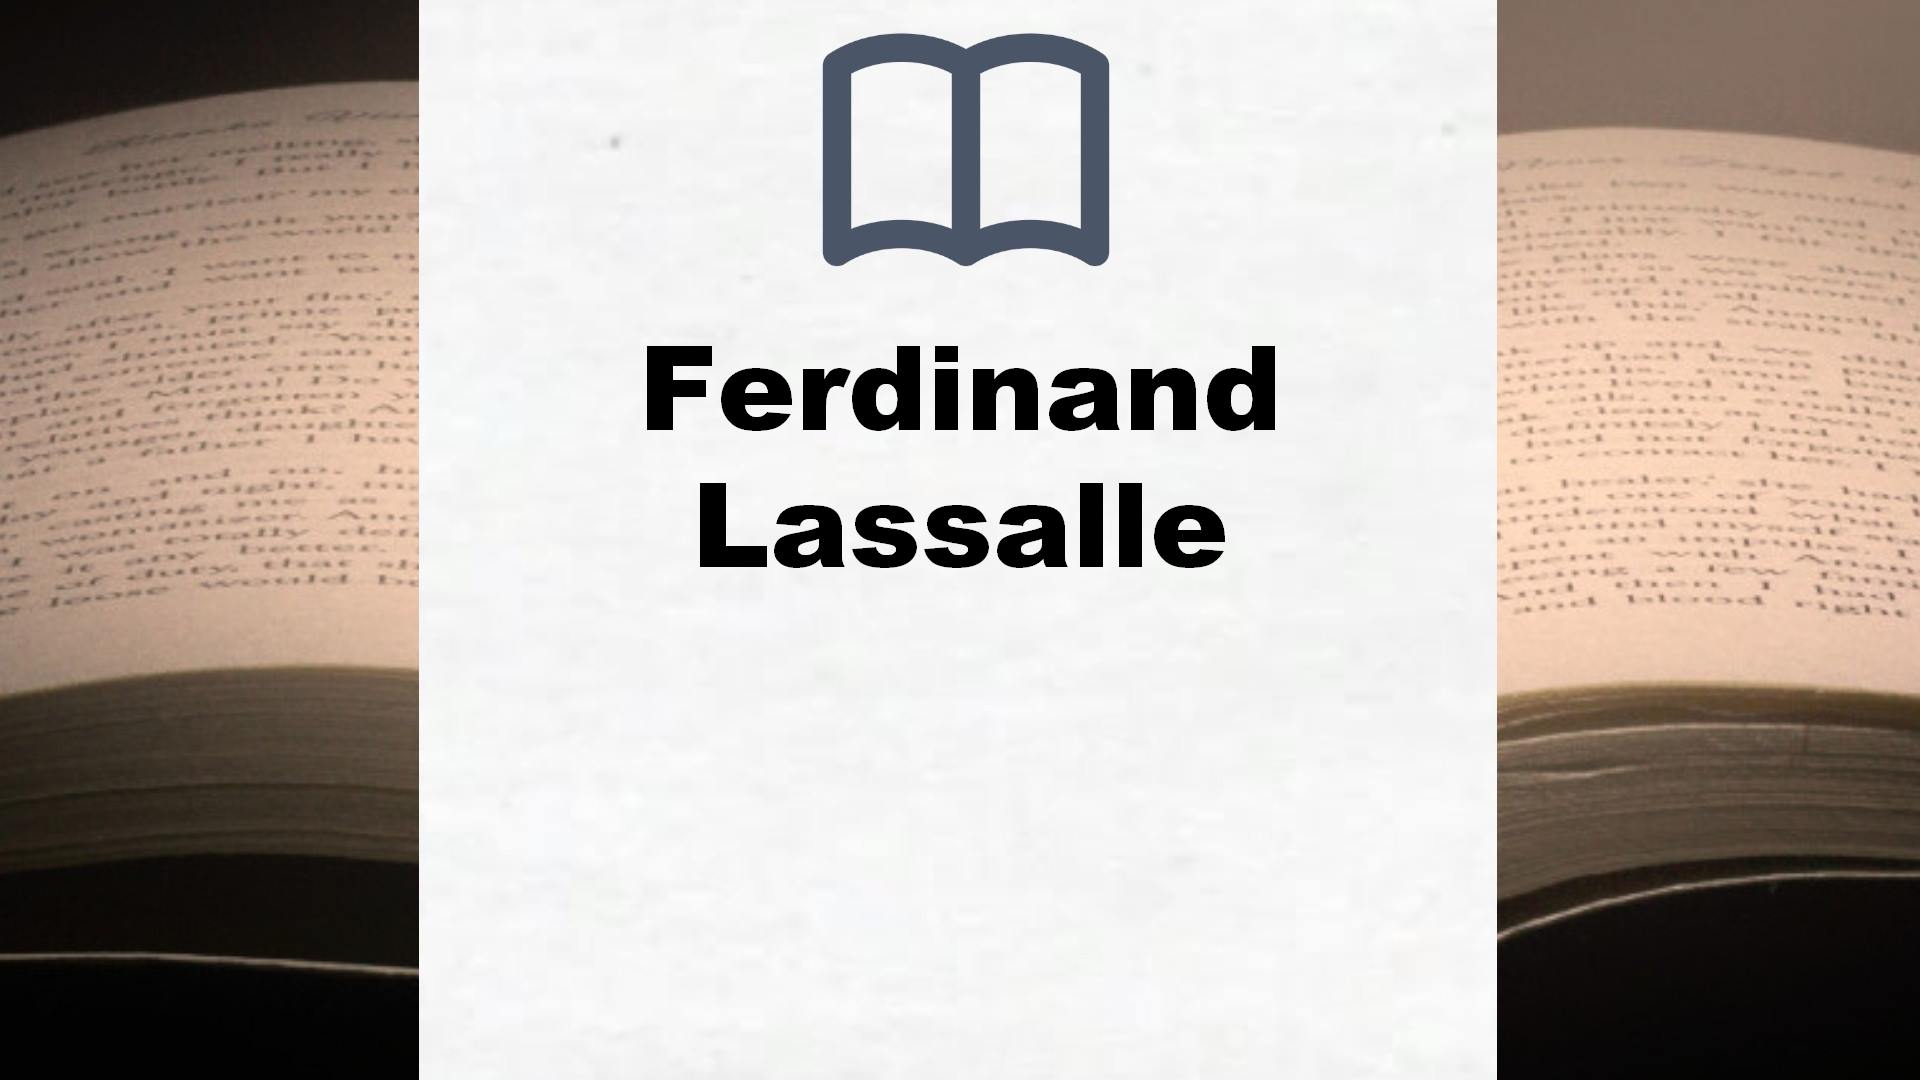 Libros Ferdinand Lassalle